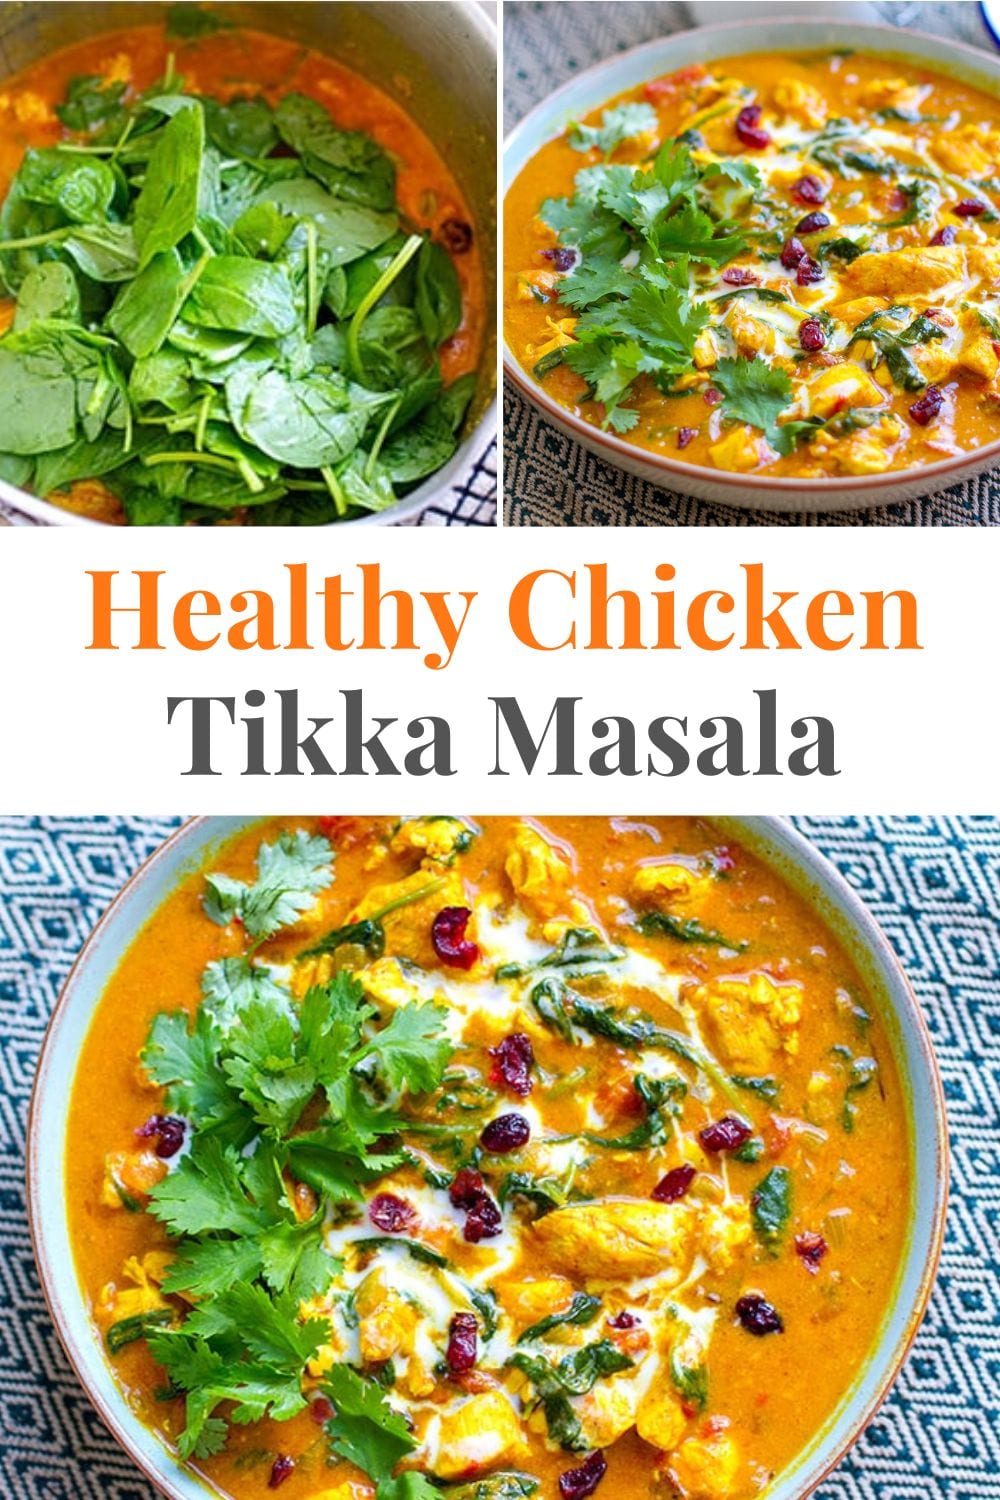 Healthy Chicken Tikka Masala With Spinach & Cranberries